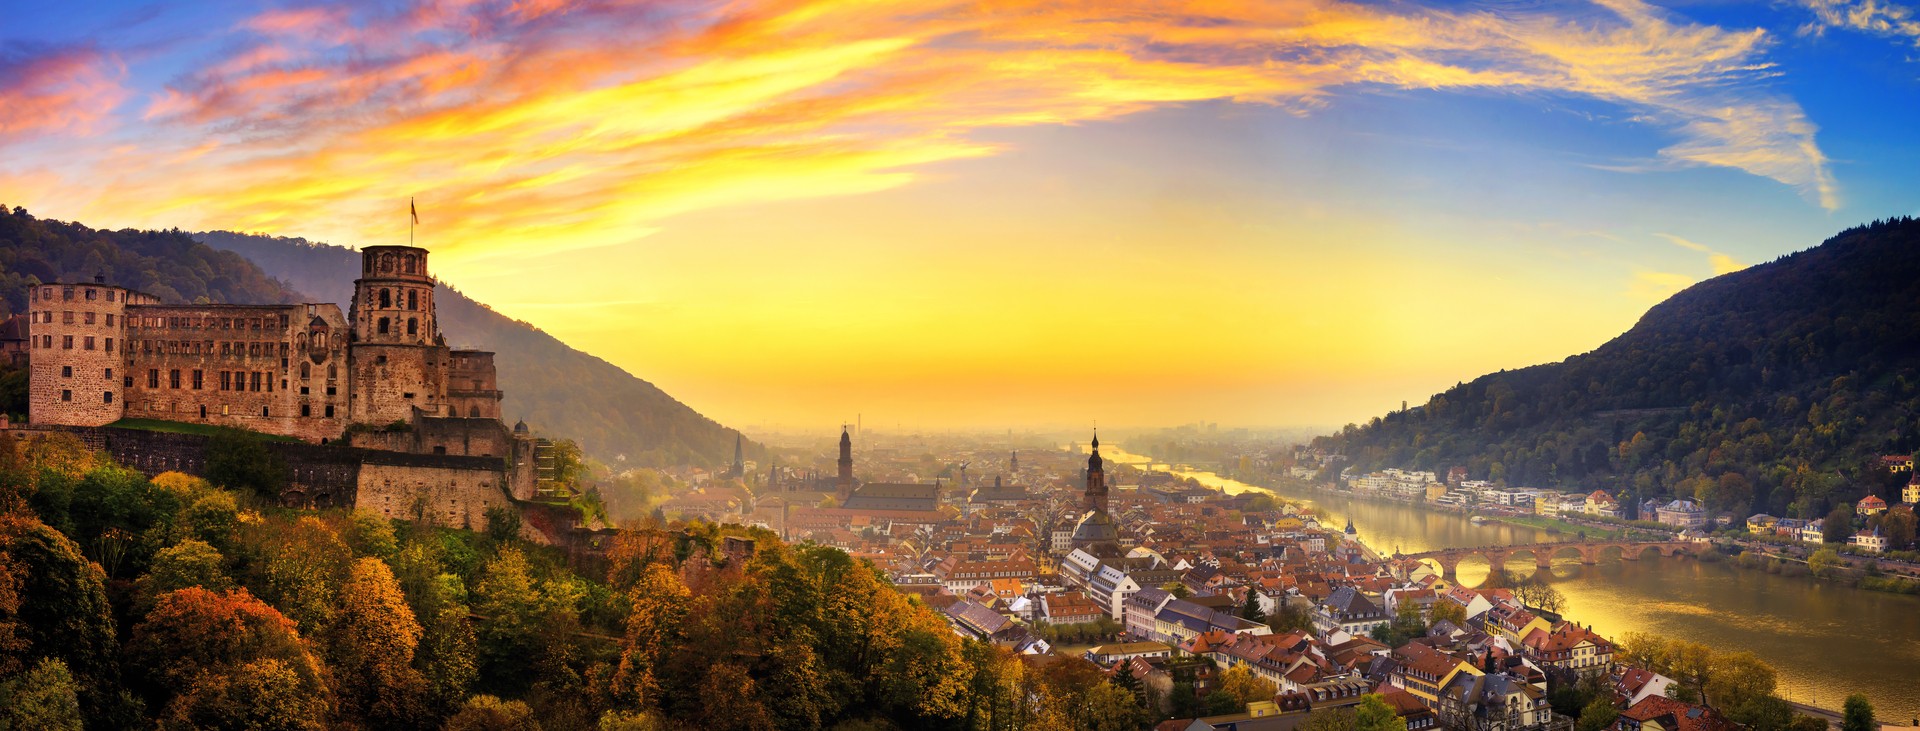 Panoramaaufnahme von Heidelberg bei Sonnenaufgang.